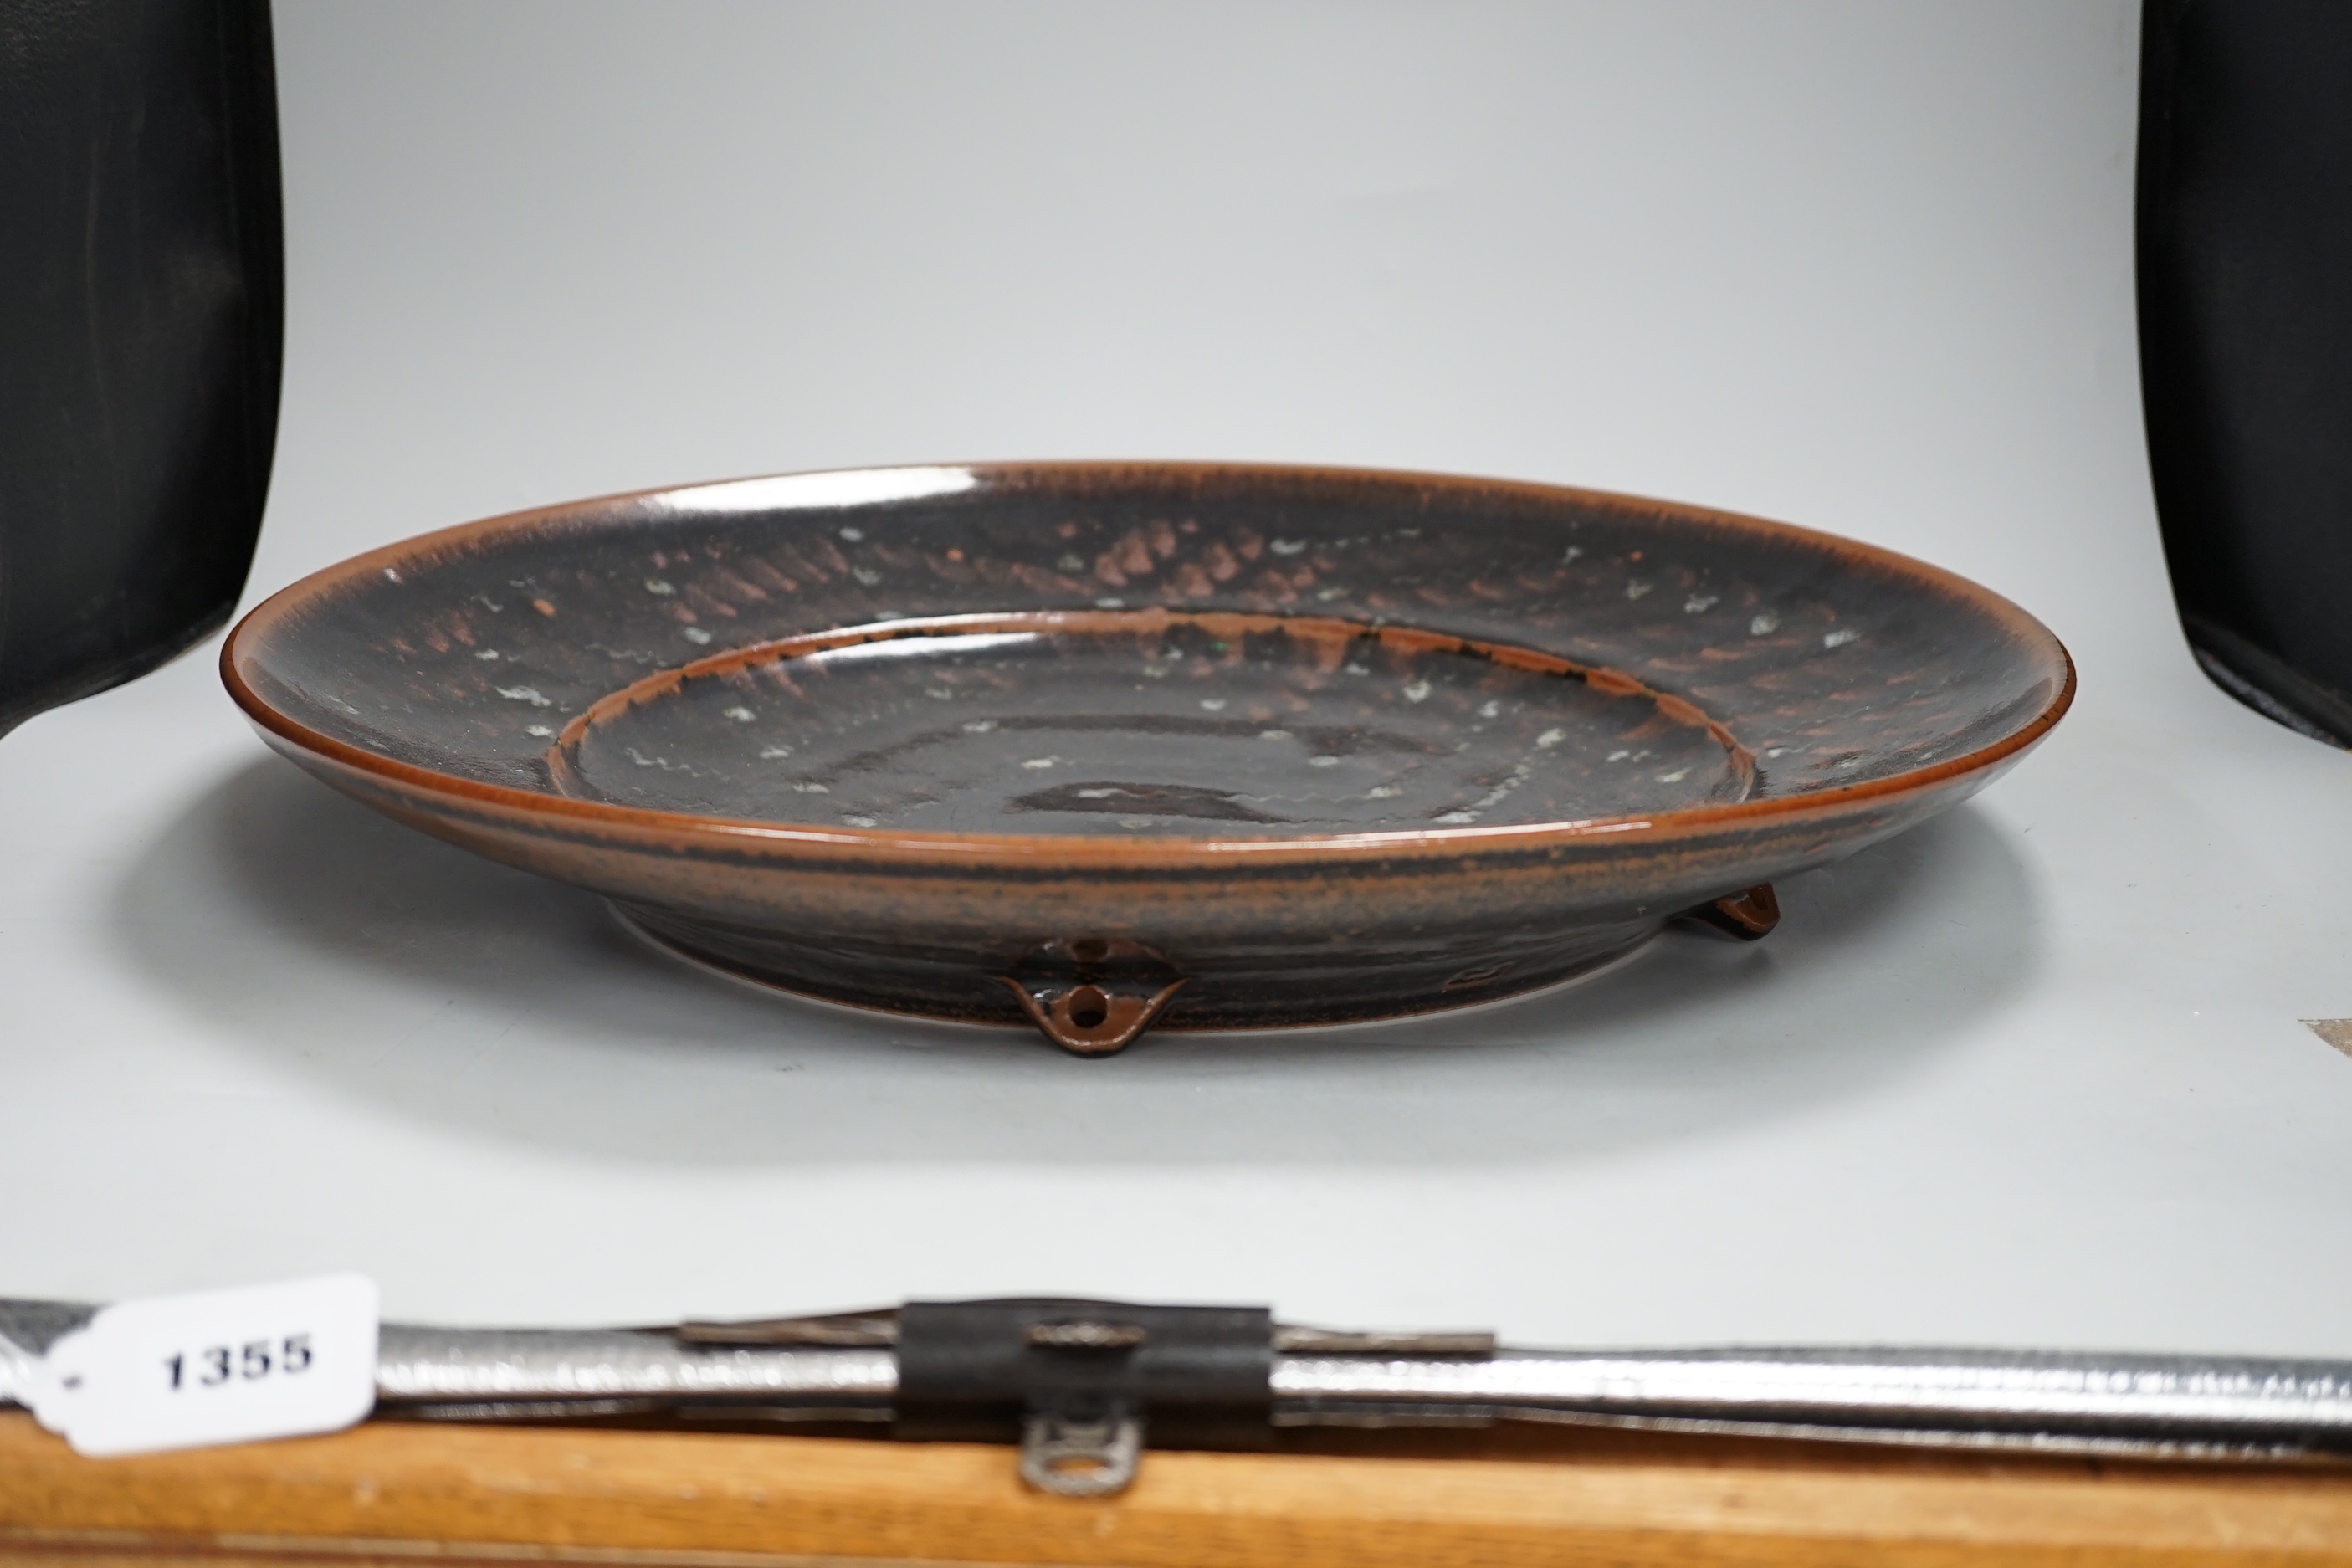 A David Lloyd Jones studio pottery charger, 49cm in diameter